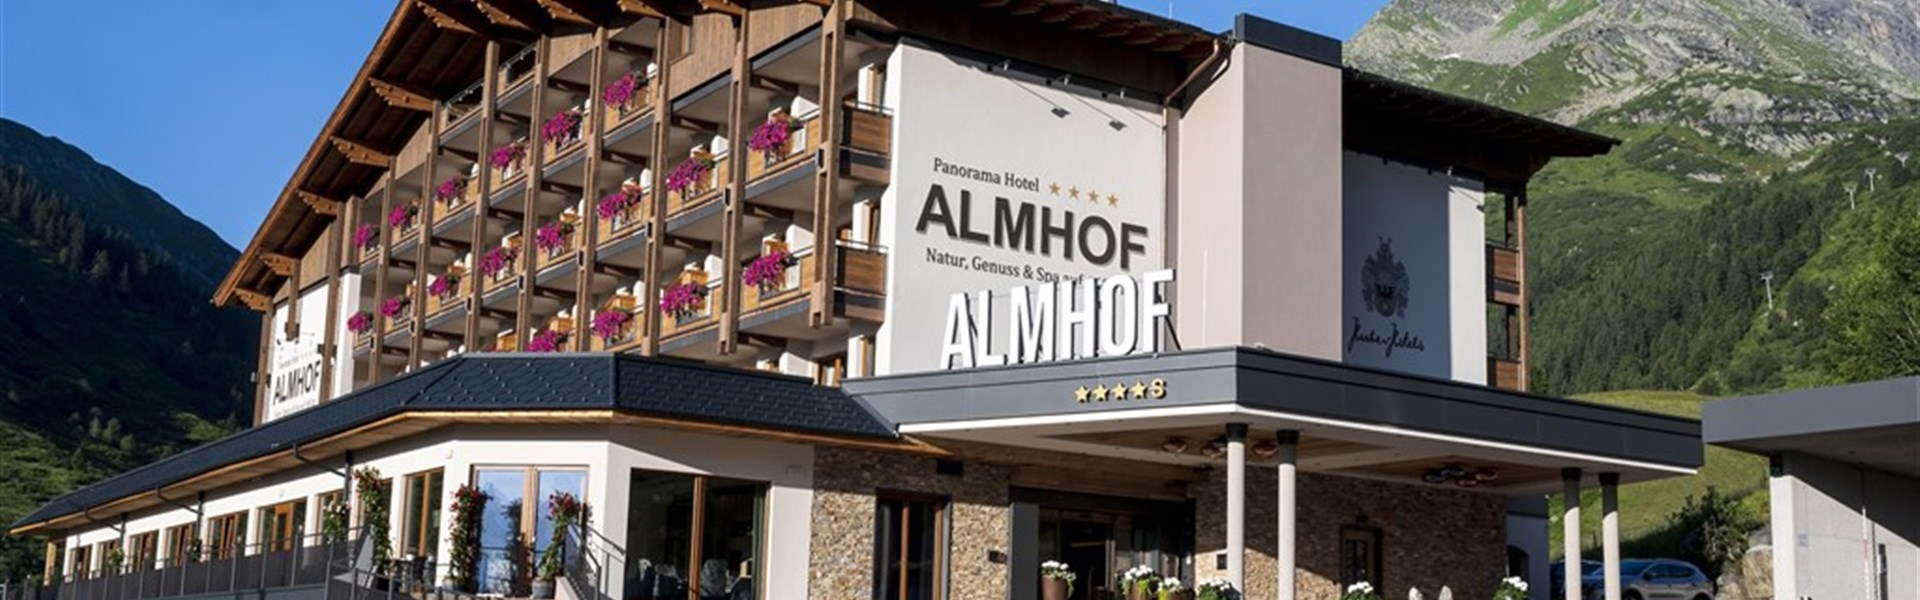 Hotel Almhof (S) - 